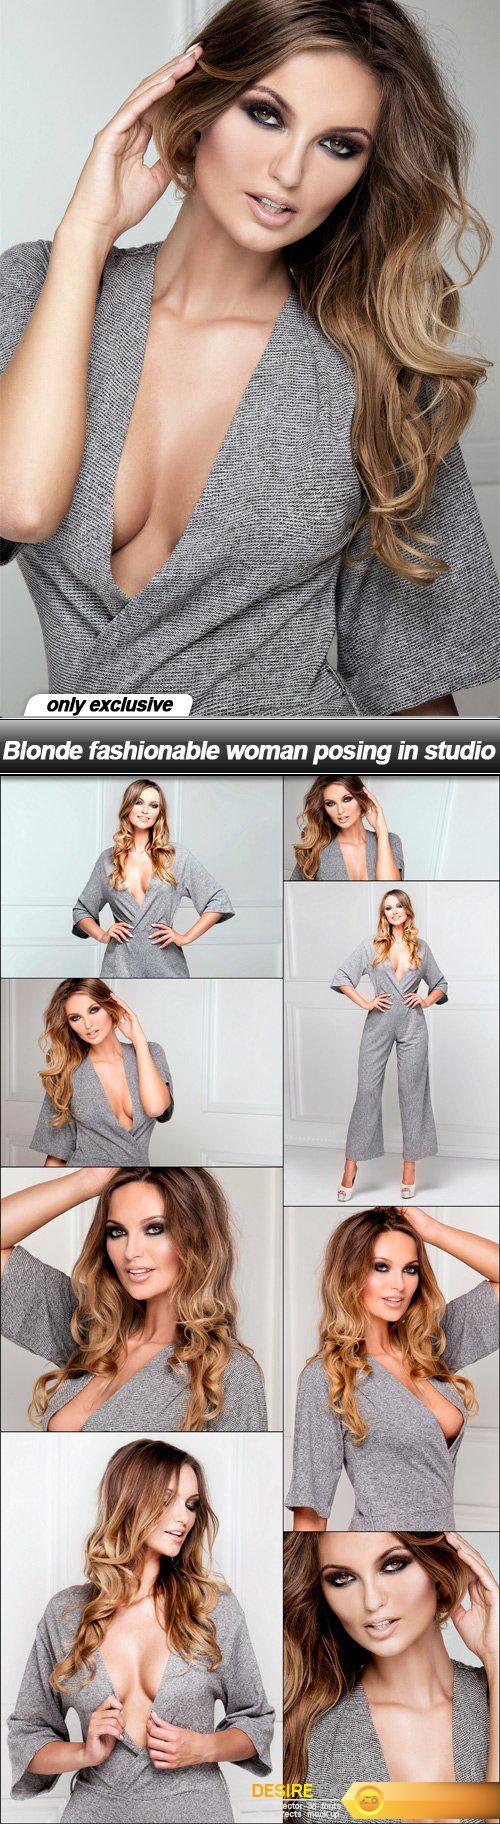 Blonde fashionable woman posing in studio - 9 UHQ JPEG